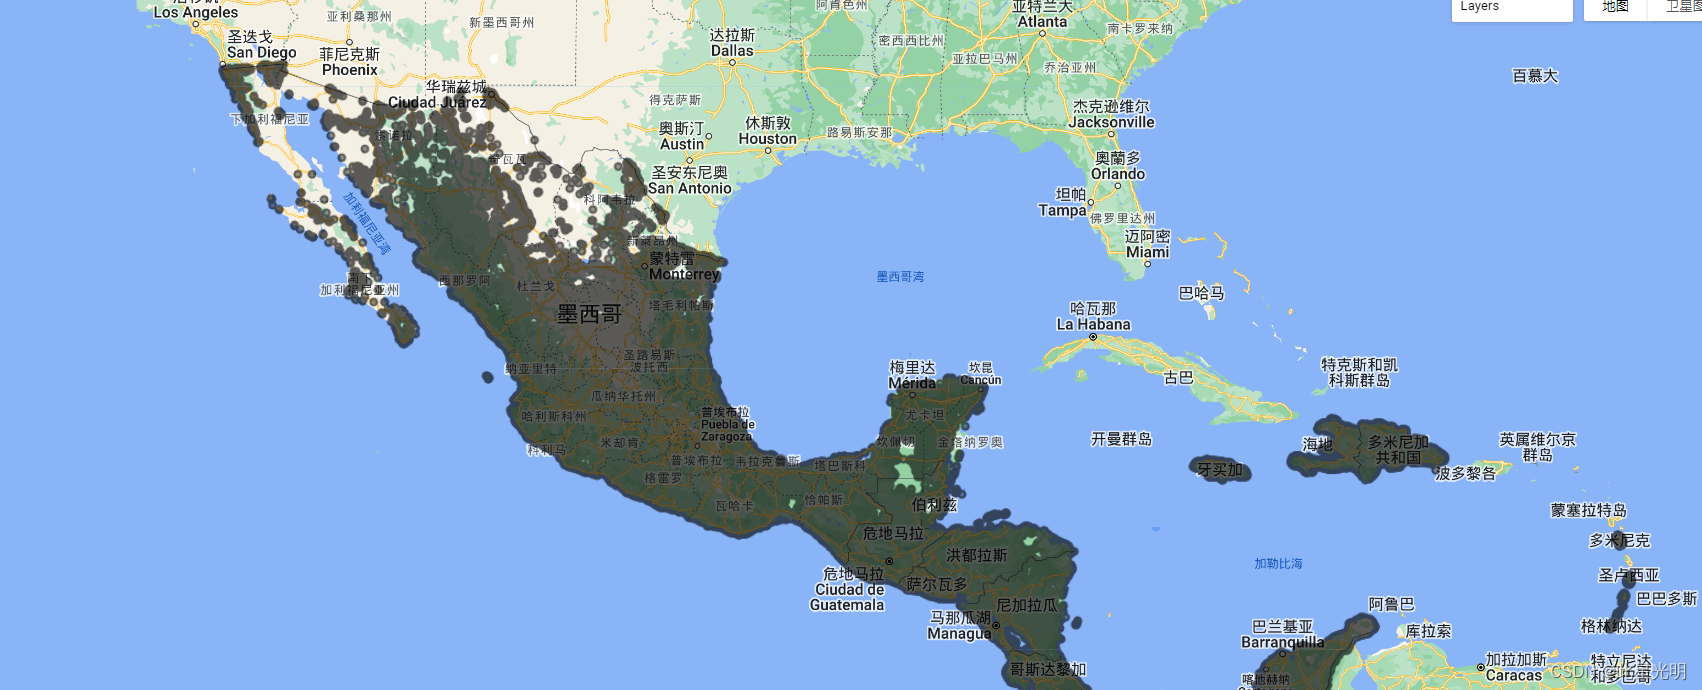 Google Earth Engine（GEE） ——全球135个中低收入国家相对财富指数(RWI)数据集